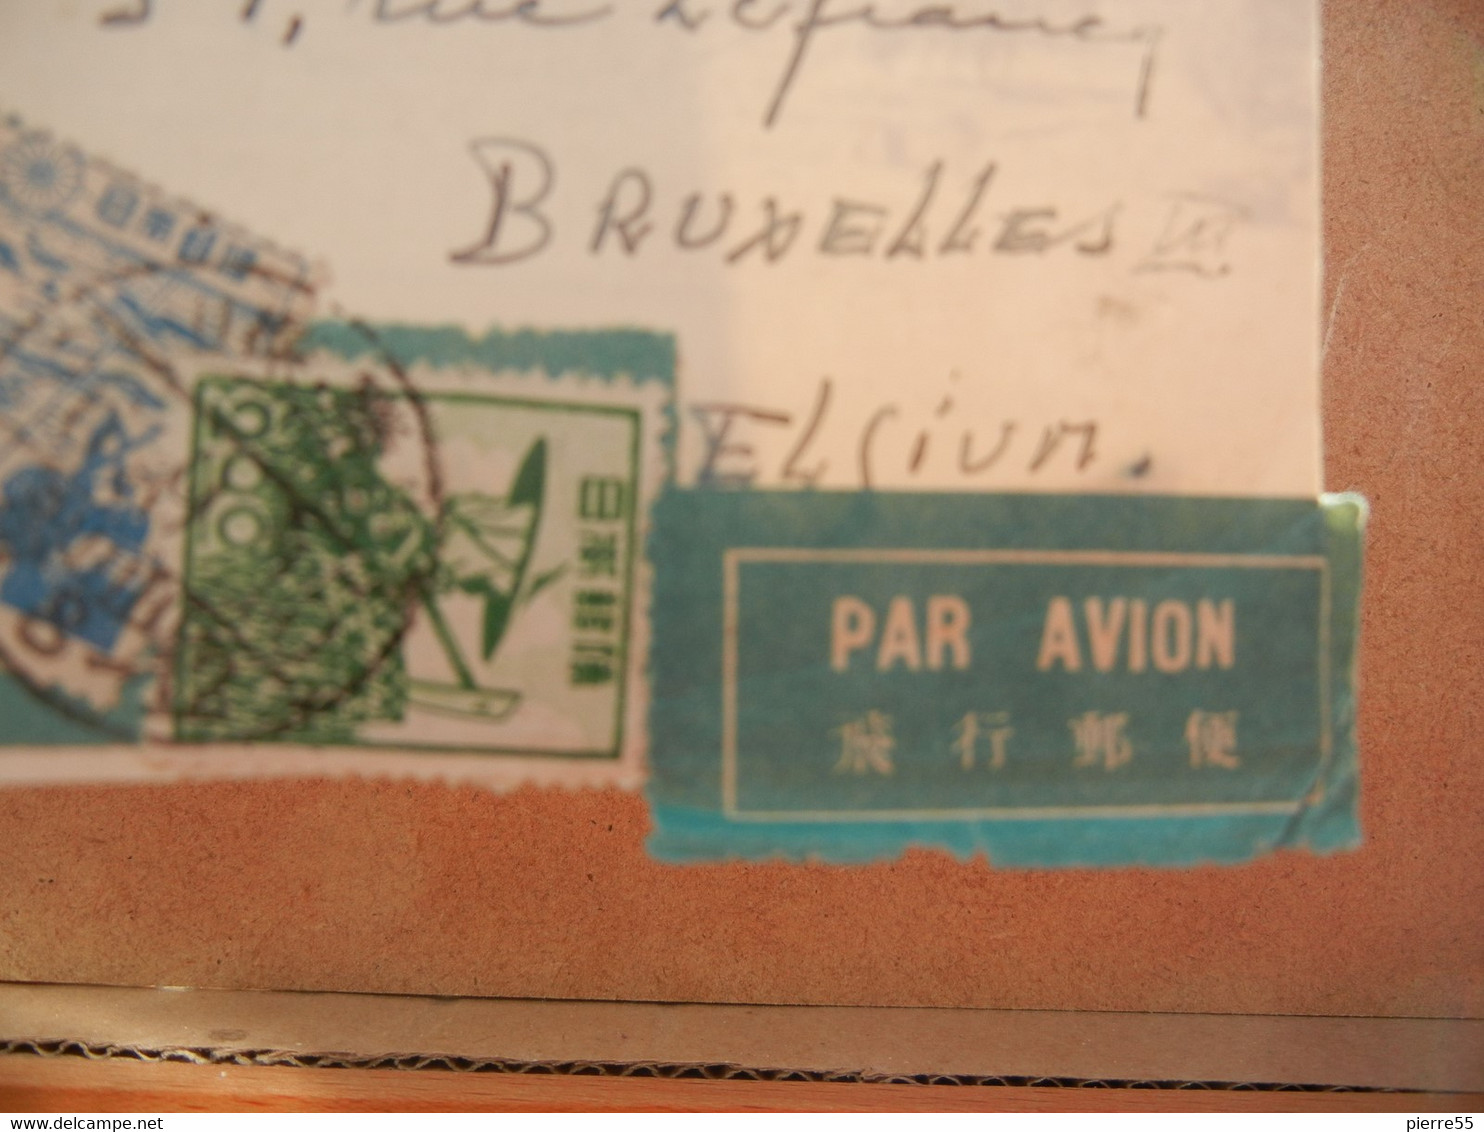 CPA JAPON - VIEW FROM THE SECOND FLOOR FUJI-VIEW HOTEL - 5 Timbres 3oblit Japon + Oblit Bruxelles 1951 + "par Avion" - Covers & Documents